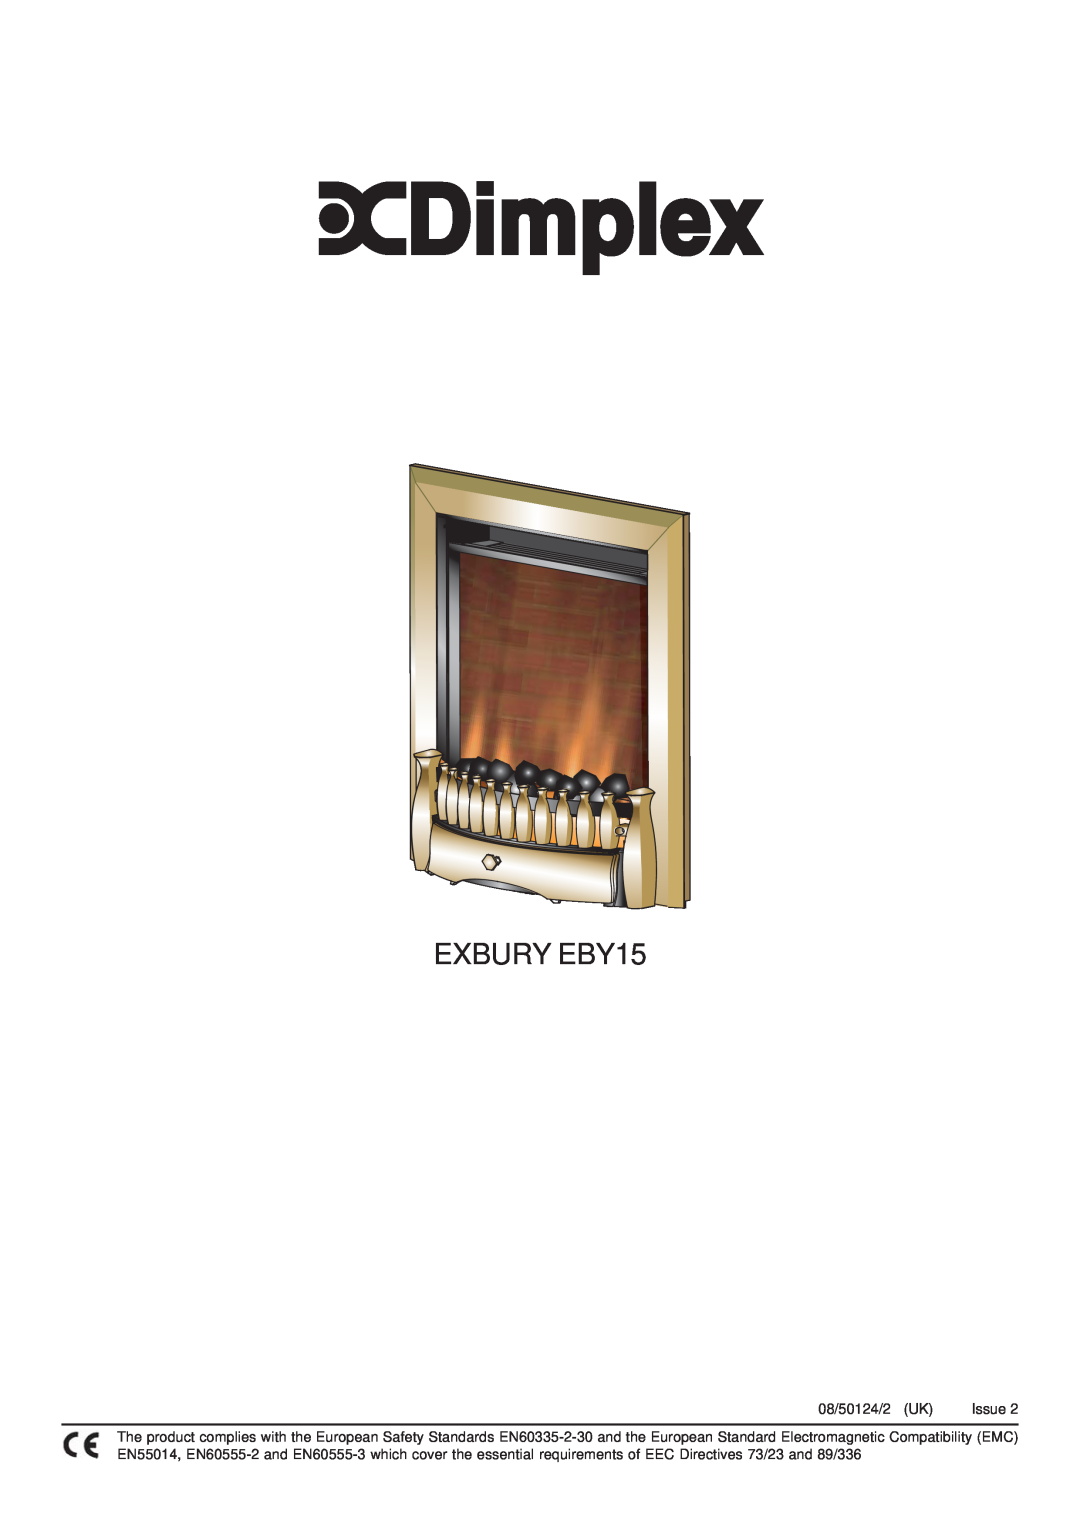 Dimplex manual EXBURY EBY15, 08/50124/2 UK 